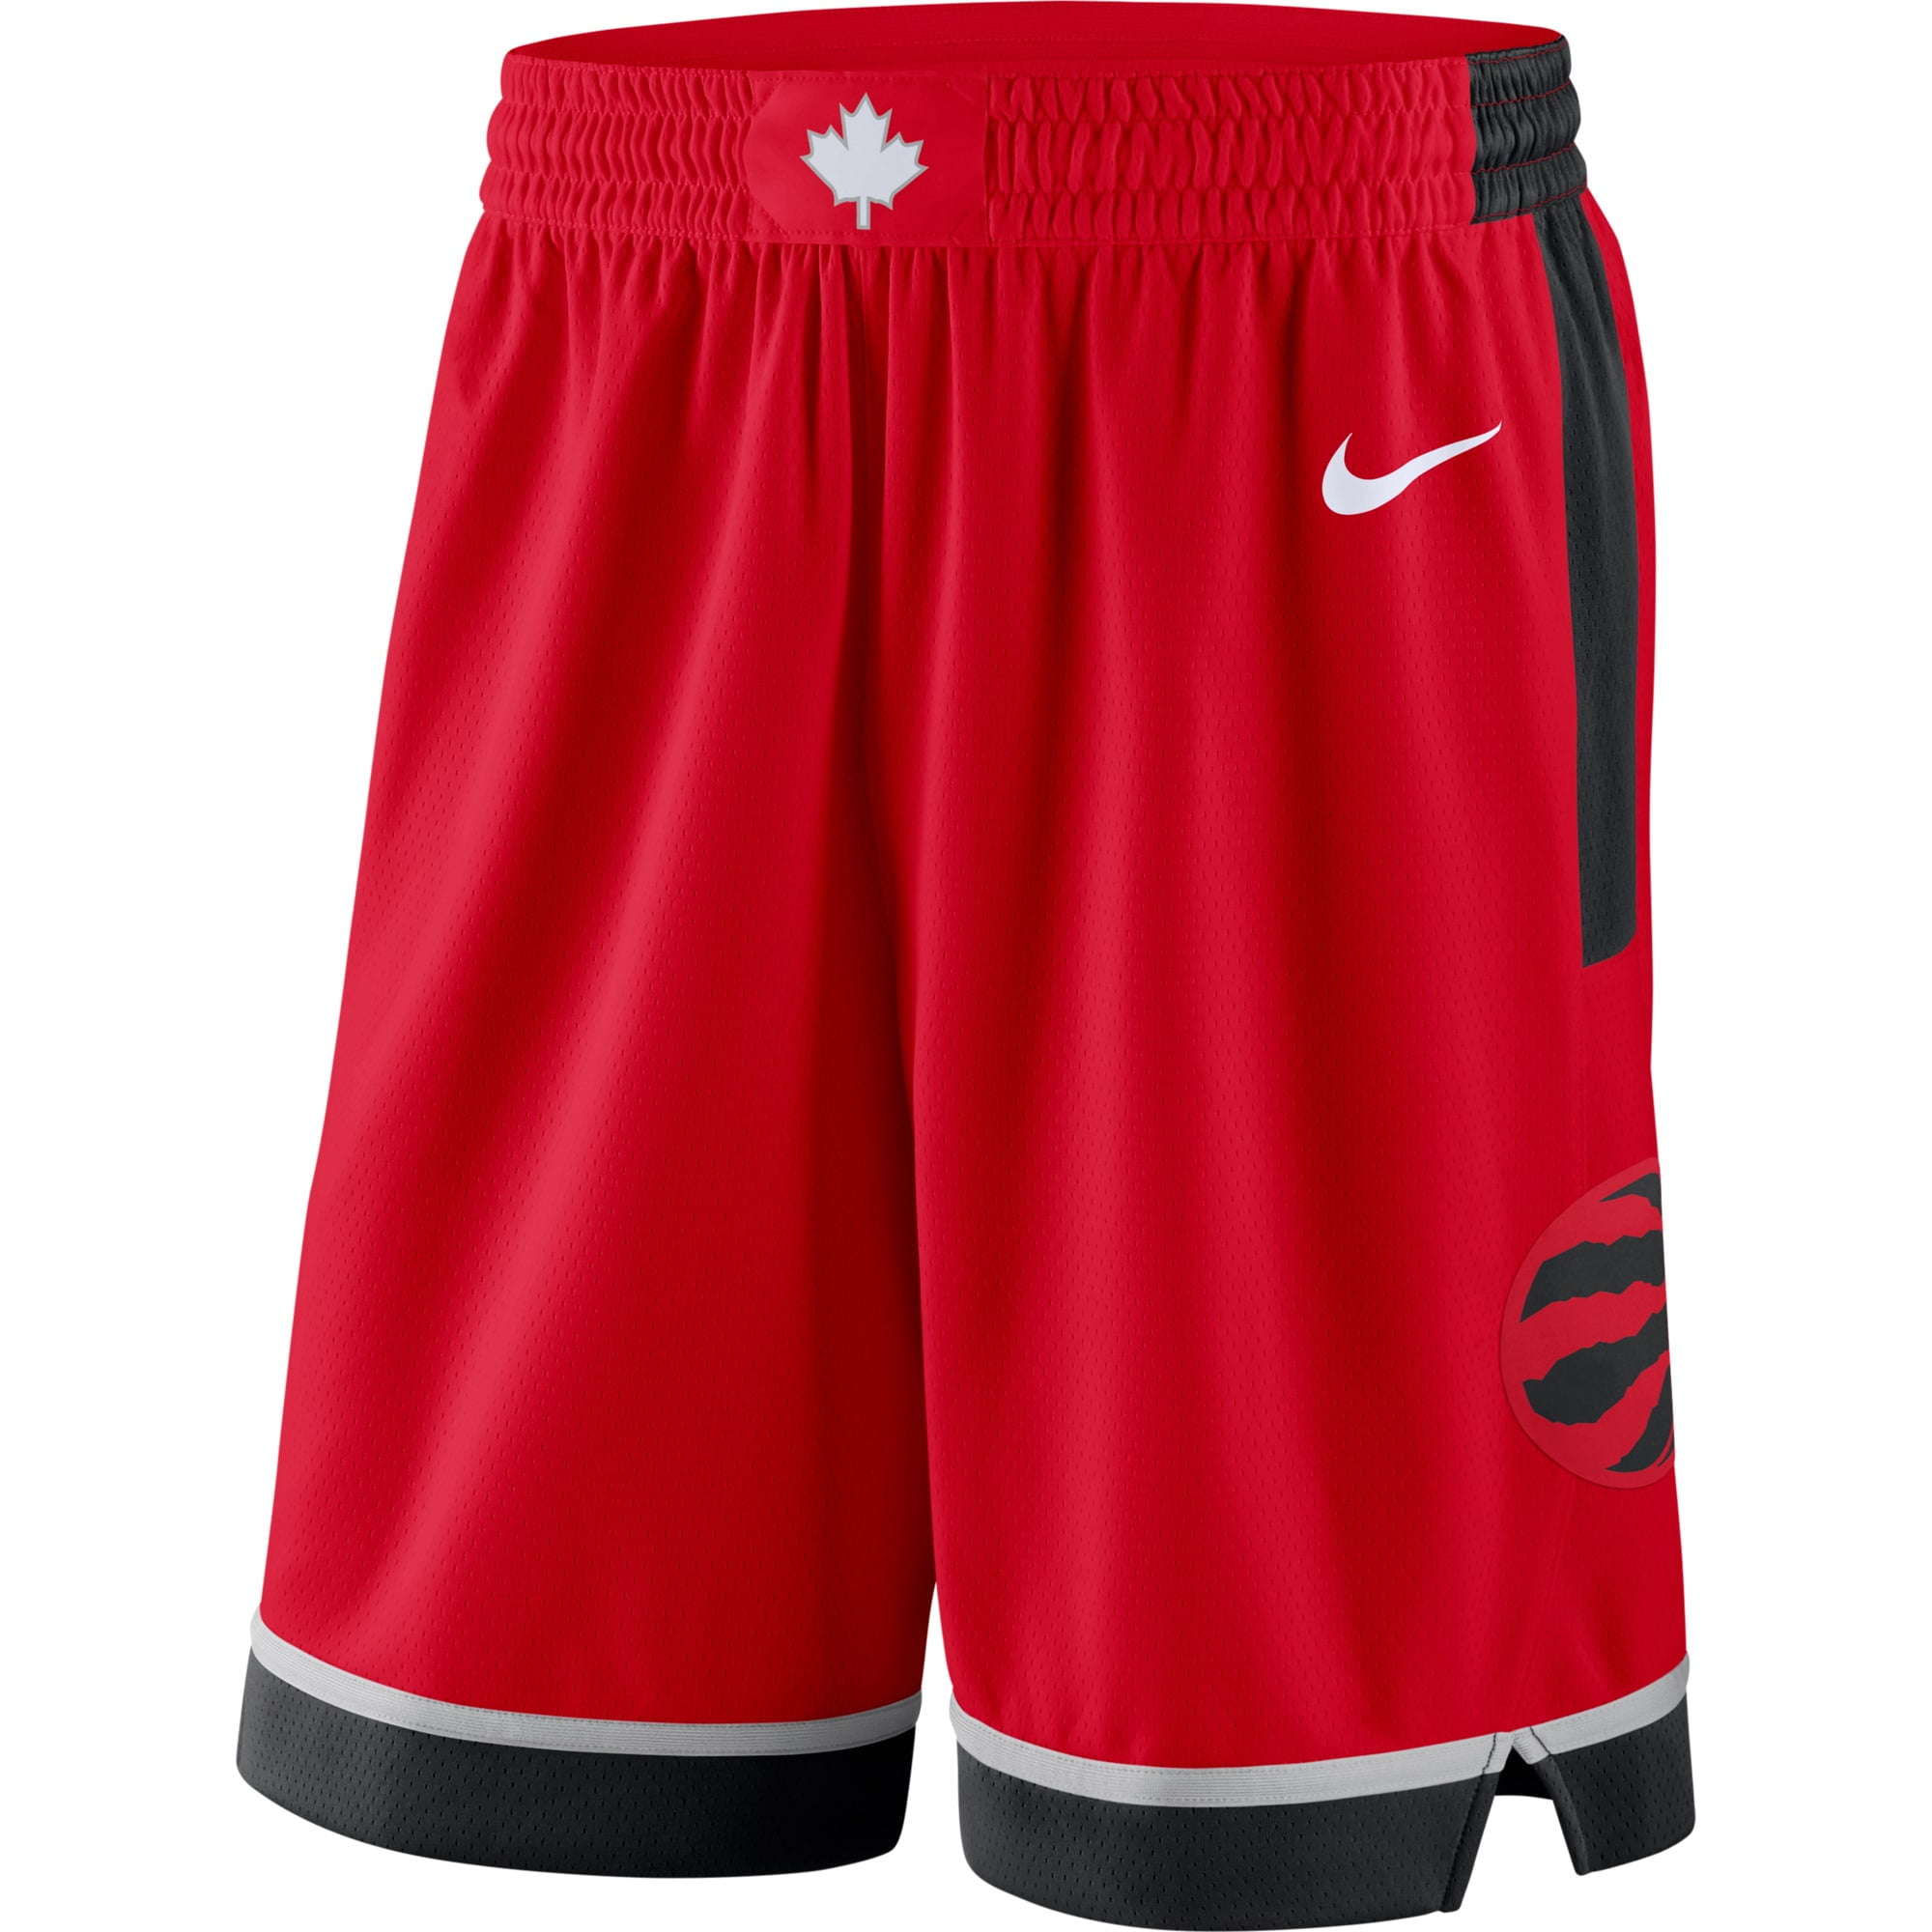 Toronto Raptors Basketball Shorts Swingman Stitched Men's Short Pants 